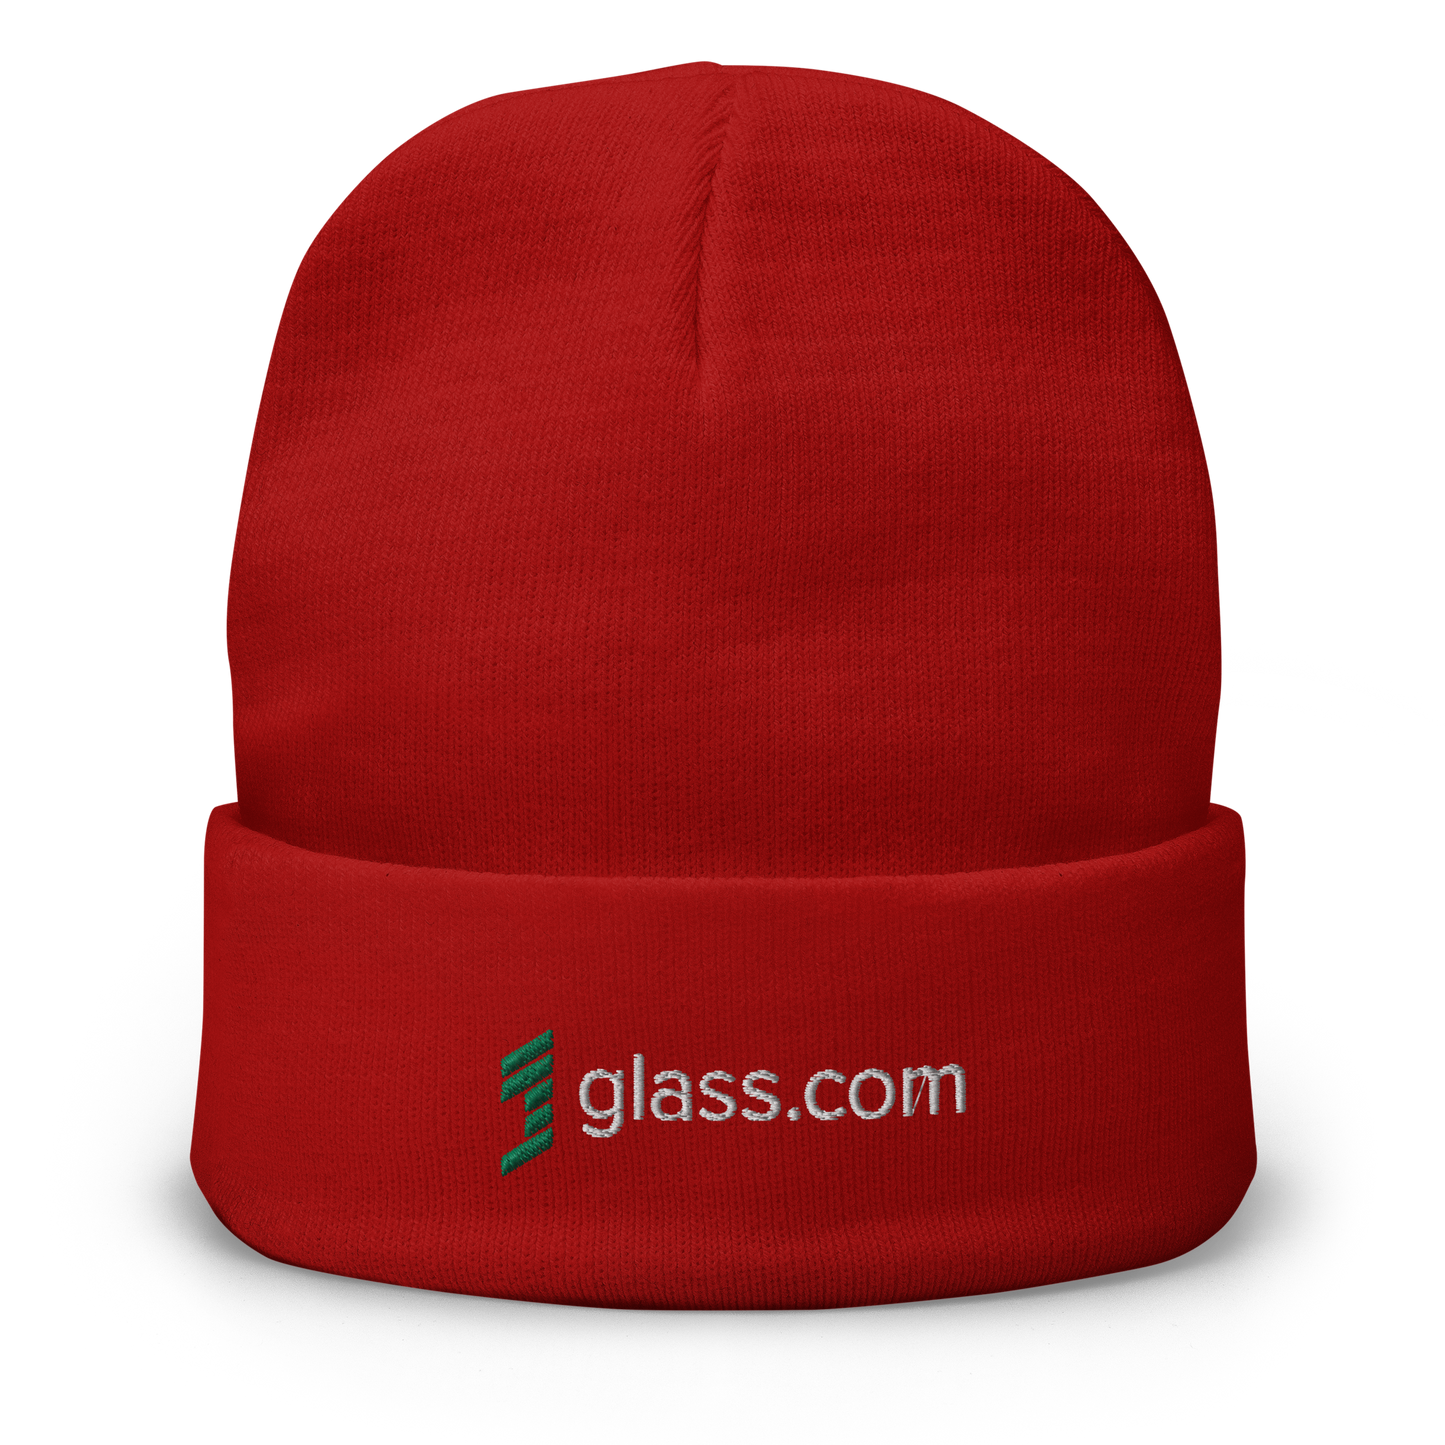 Glass.com Embroidered Beanie